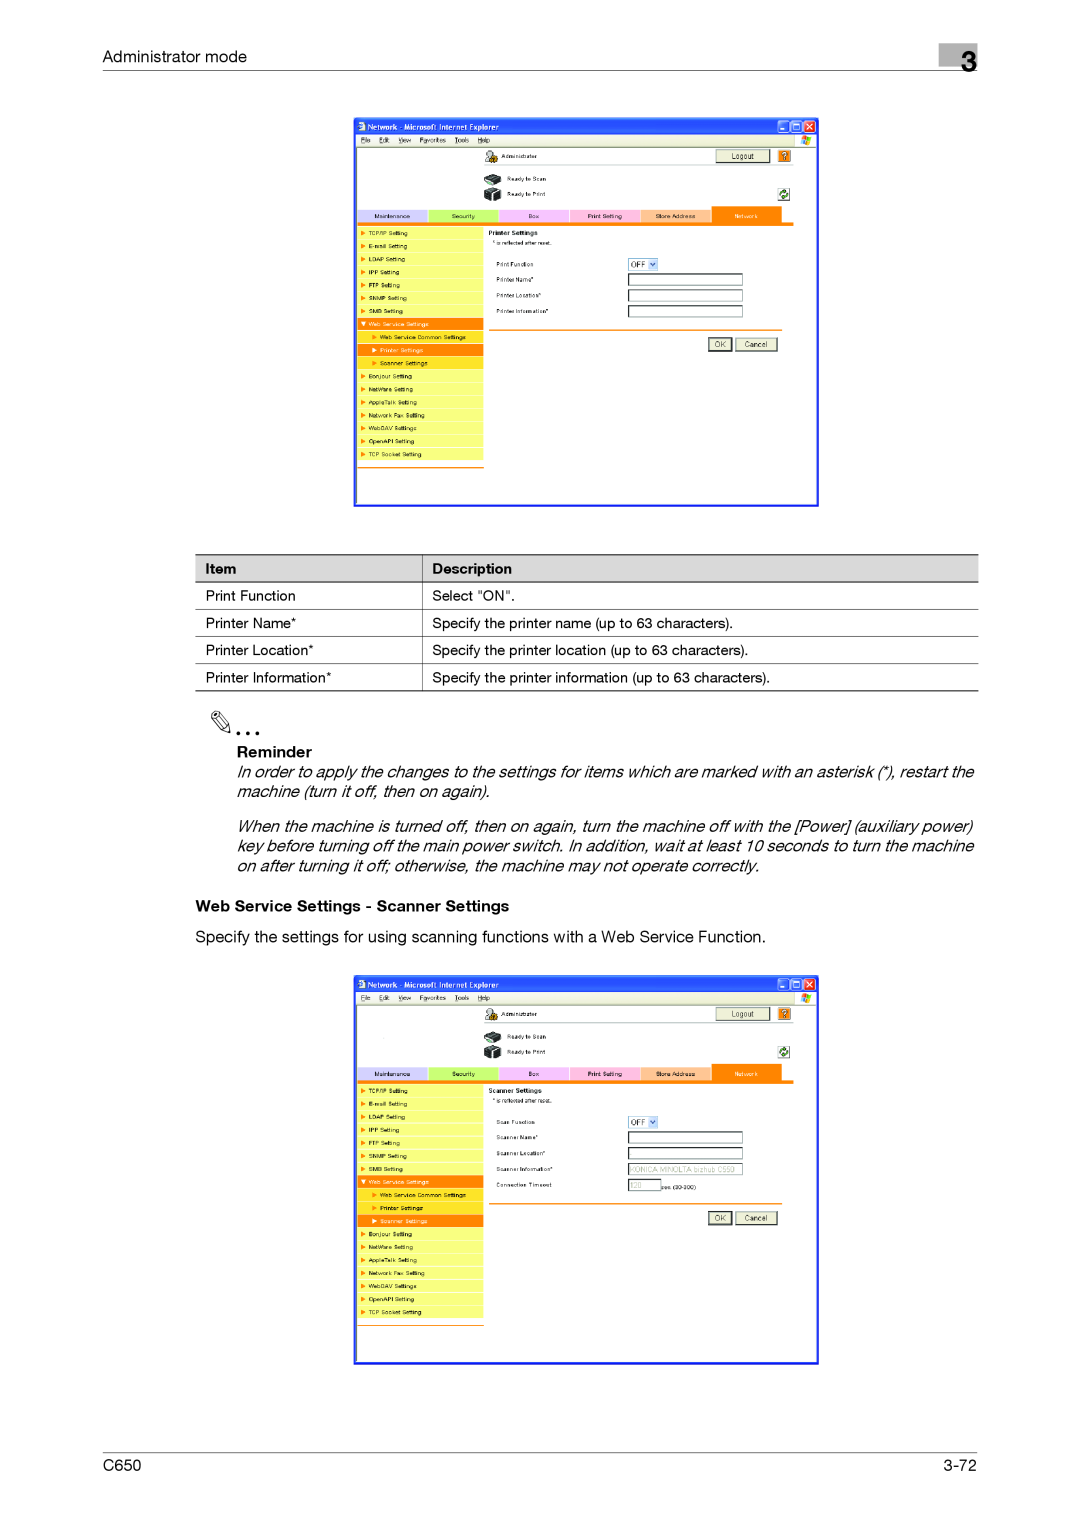 Konica Minolta C650 manual Administrator mode, Reminder, Web Service Settings - Scanner Settings, 3-72 